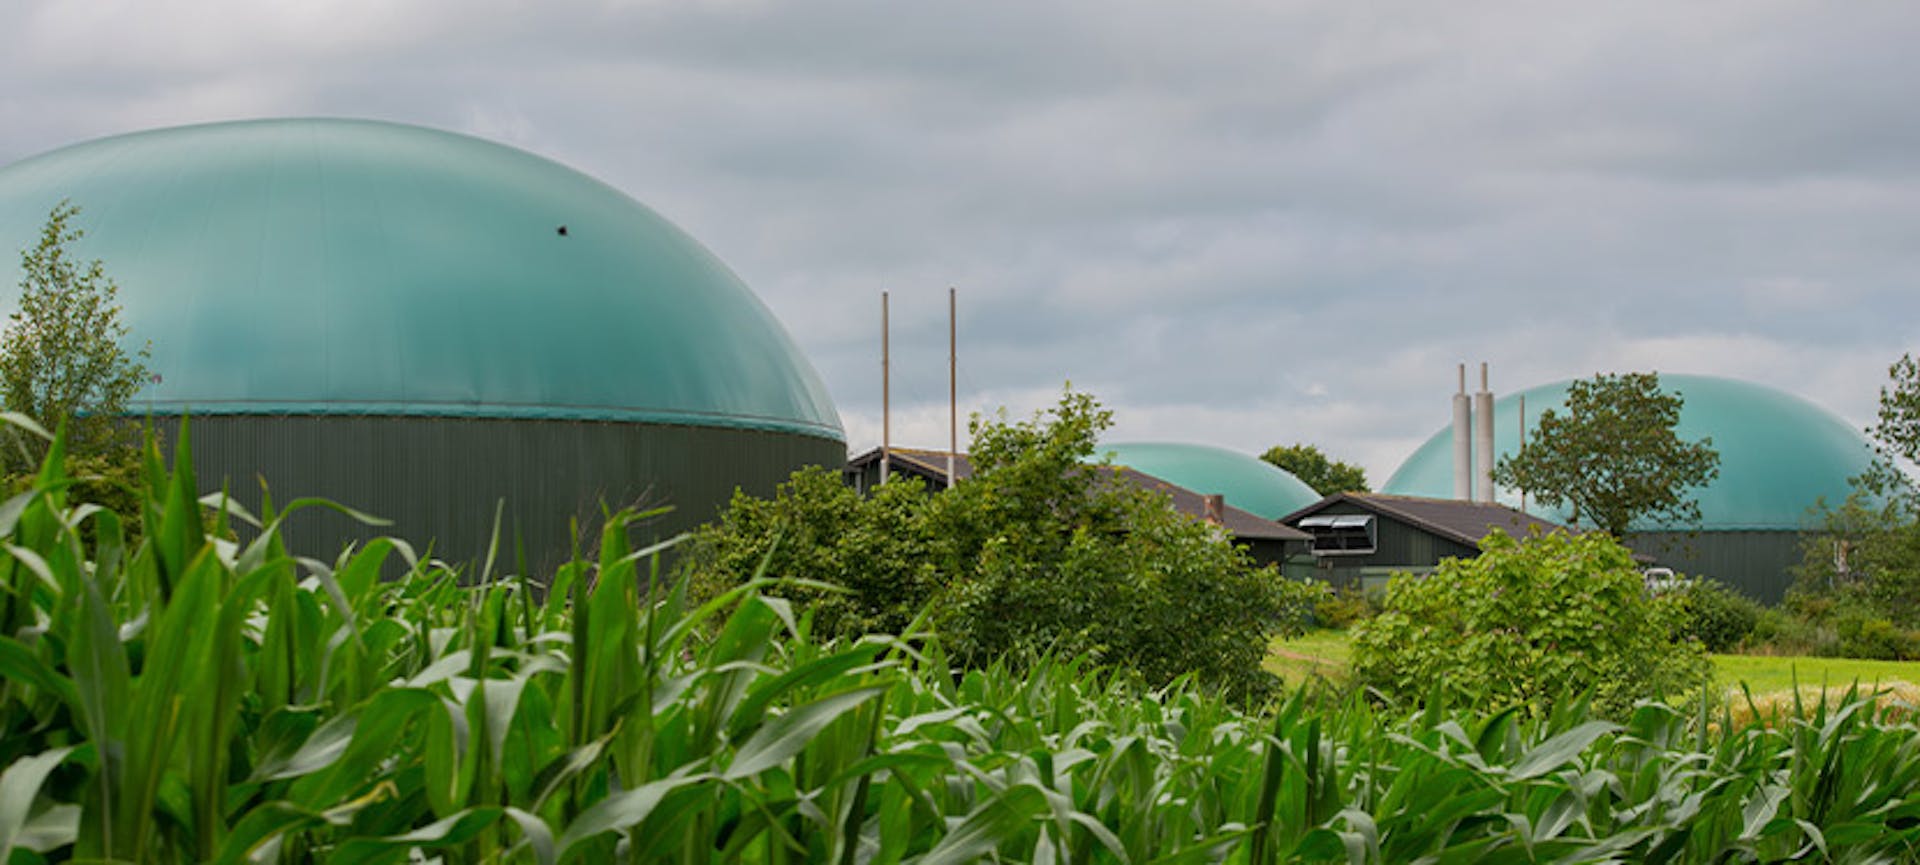 Une infrastructure de biogaz ou biométhane